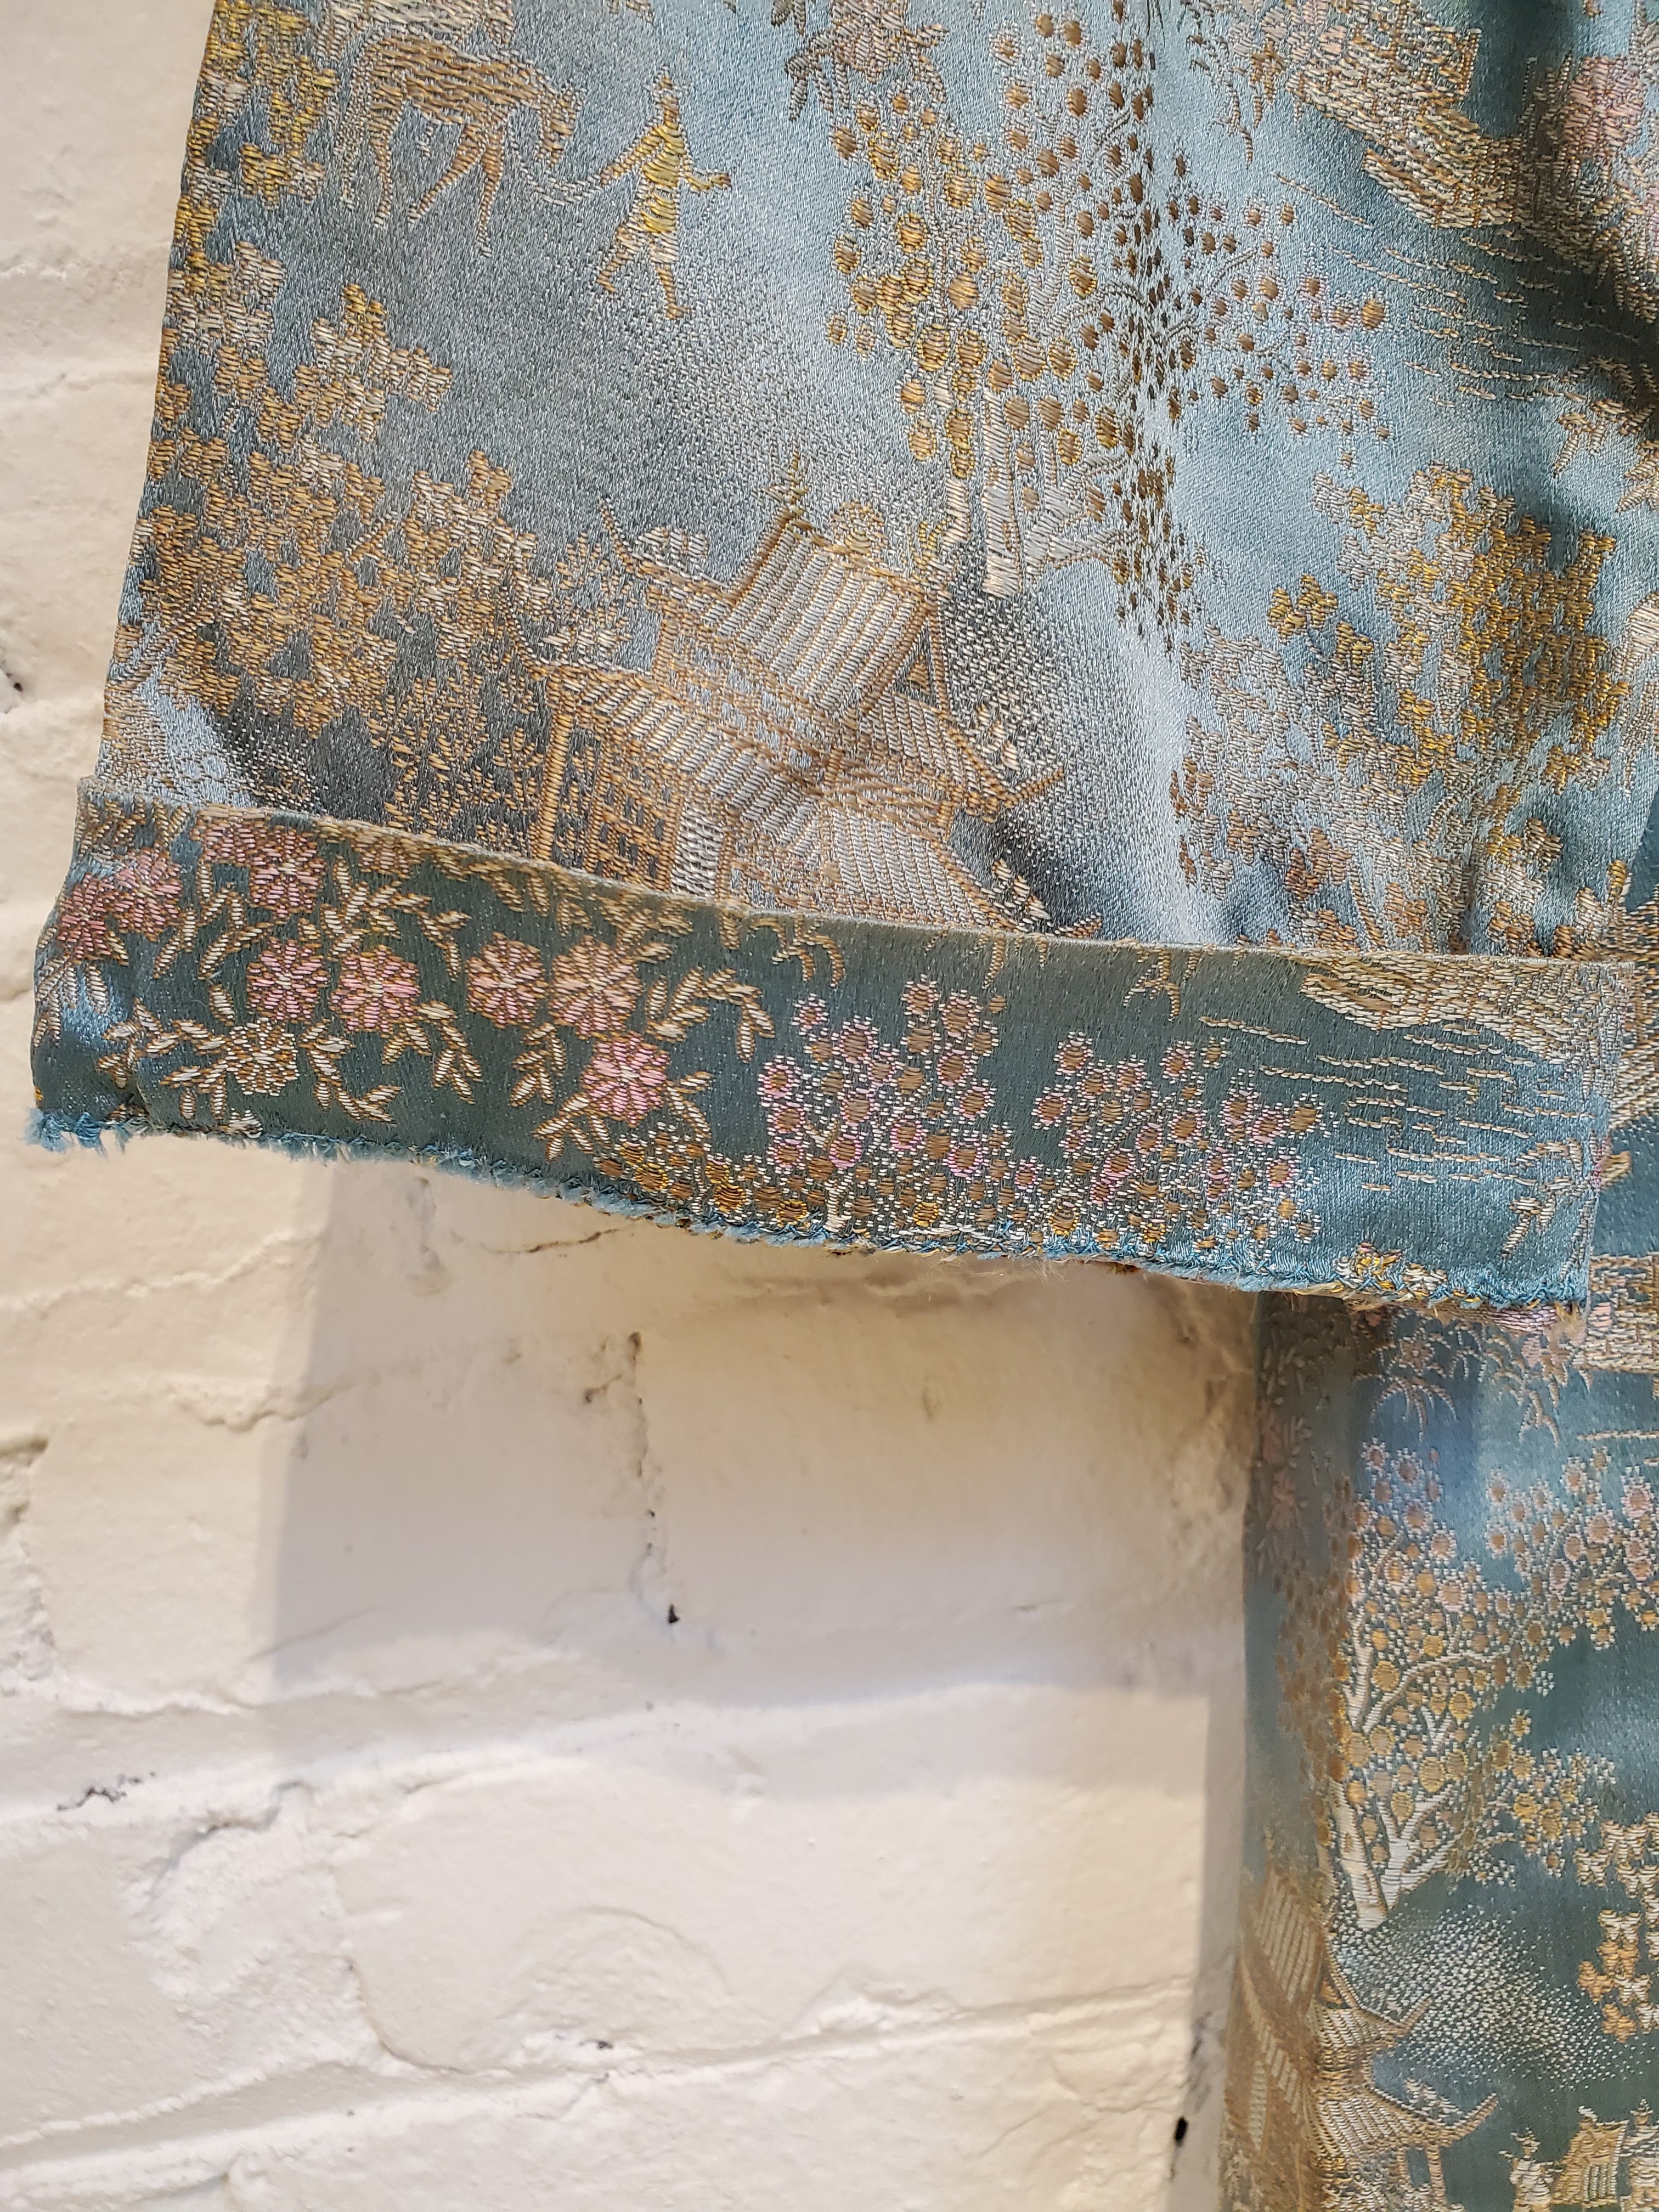 Vintage Blue & Pink Asian Scene Jacquard Pattern Jacket